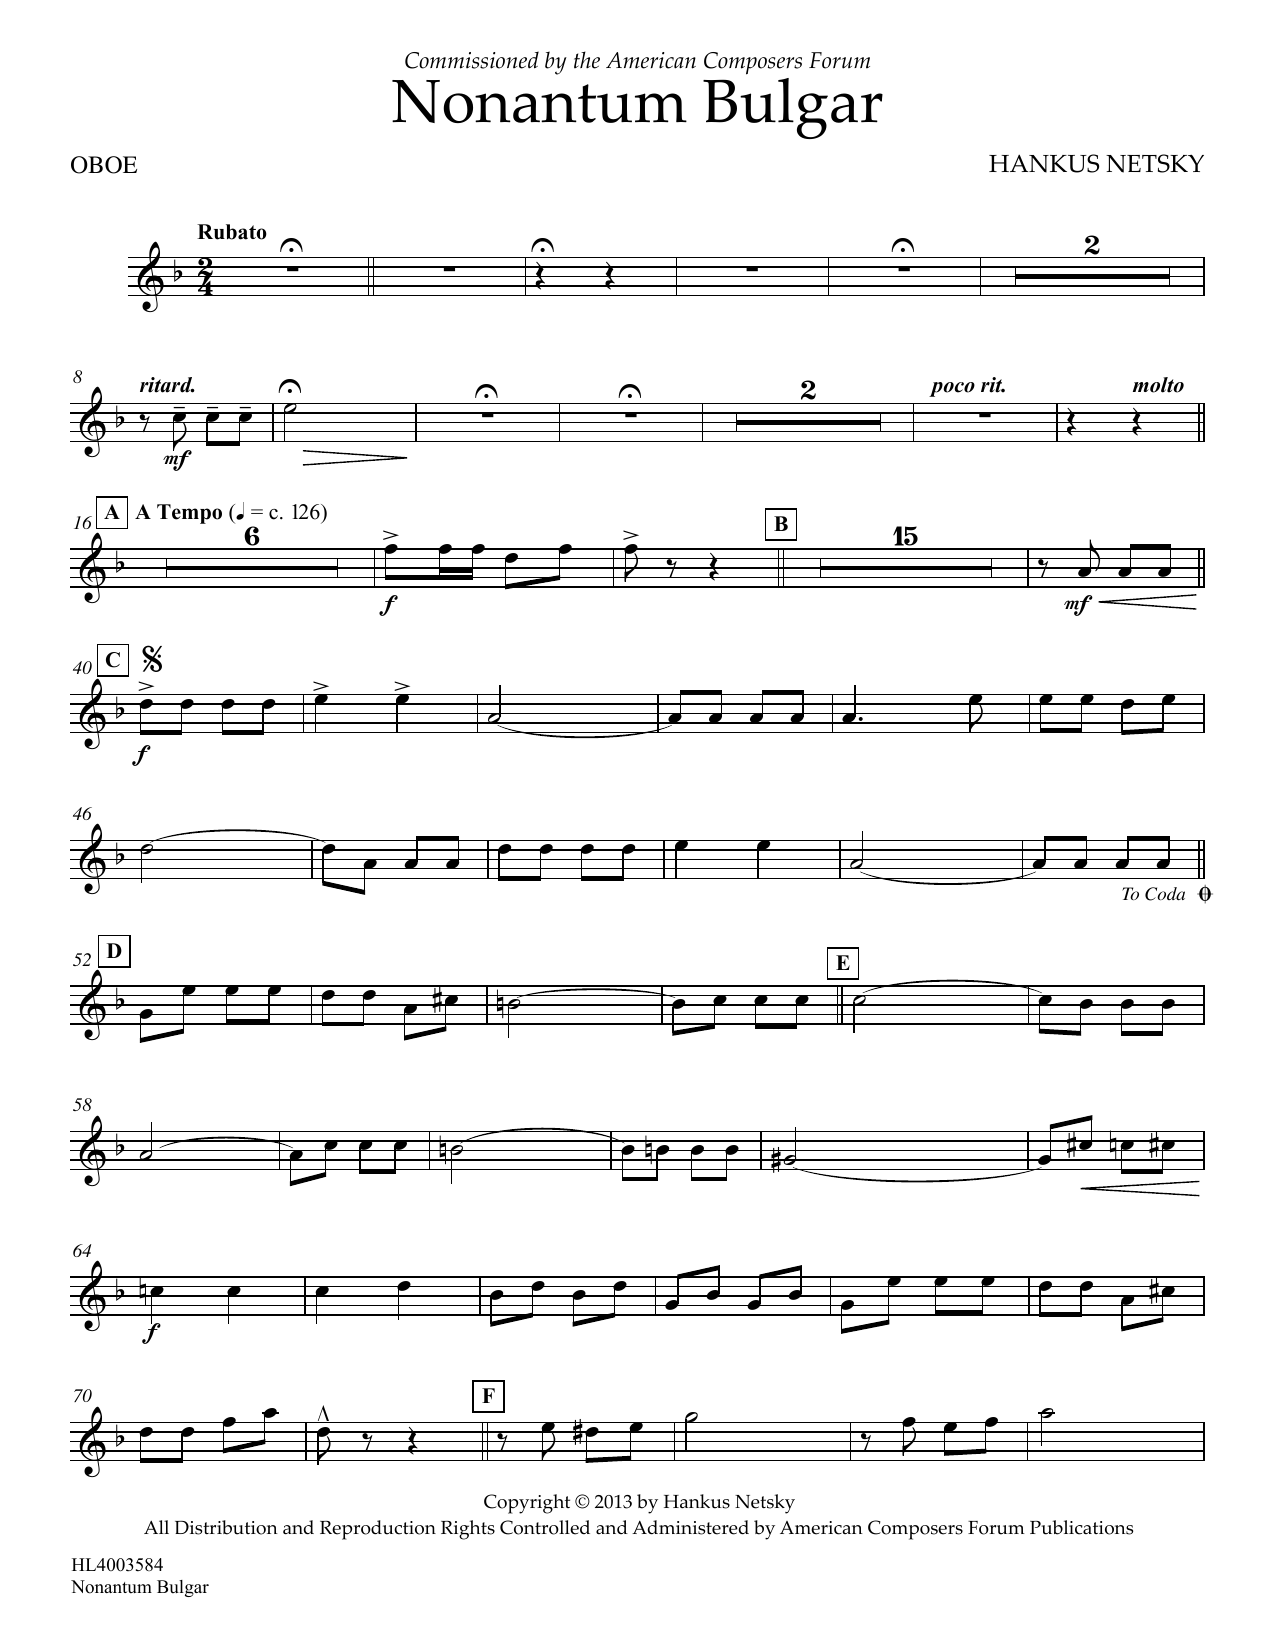 Hankus Netsky Nonantum Bulgar - Oboe sheet music notes and chords arranged for Concert Band